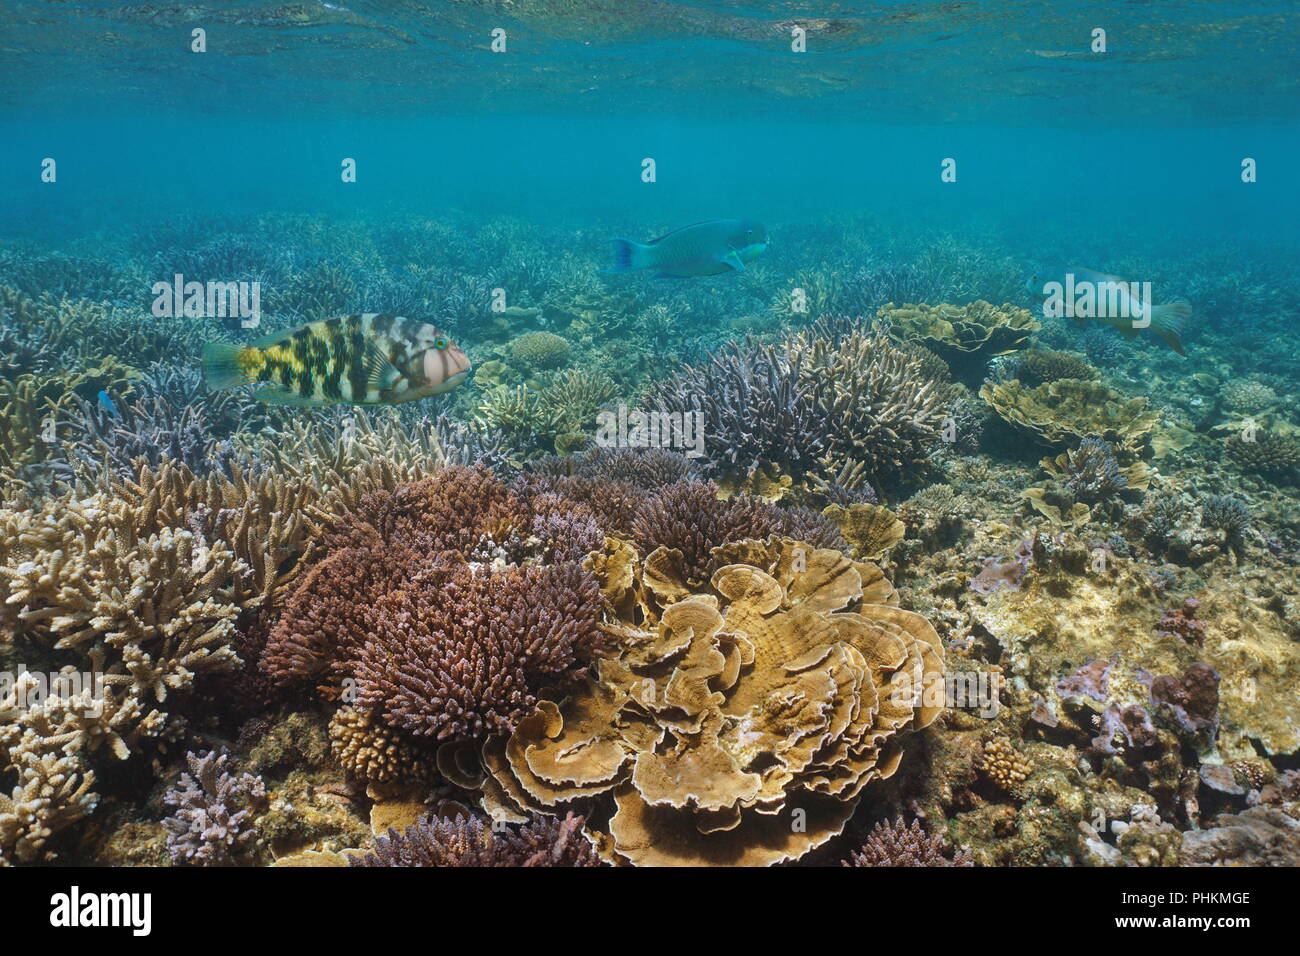 Underwater Coral reef con pesci tropicali, oceano pacifico, Nuova Caledonia, Oceania Foto Stock